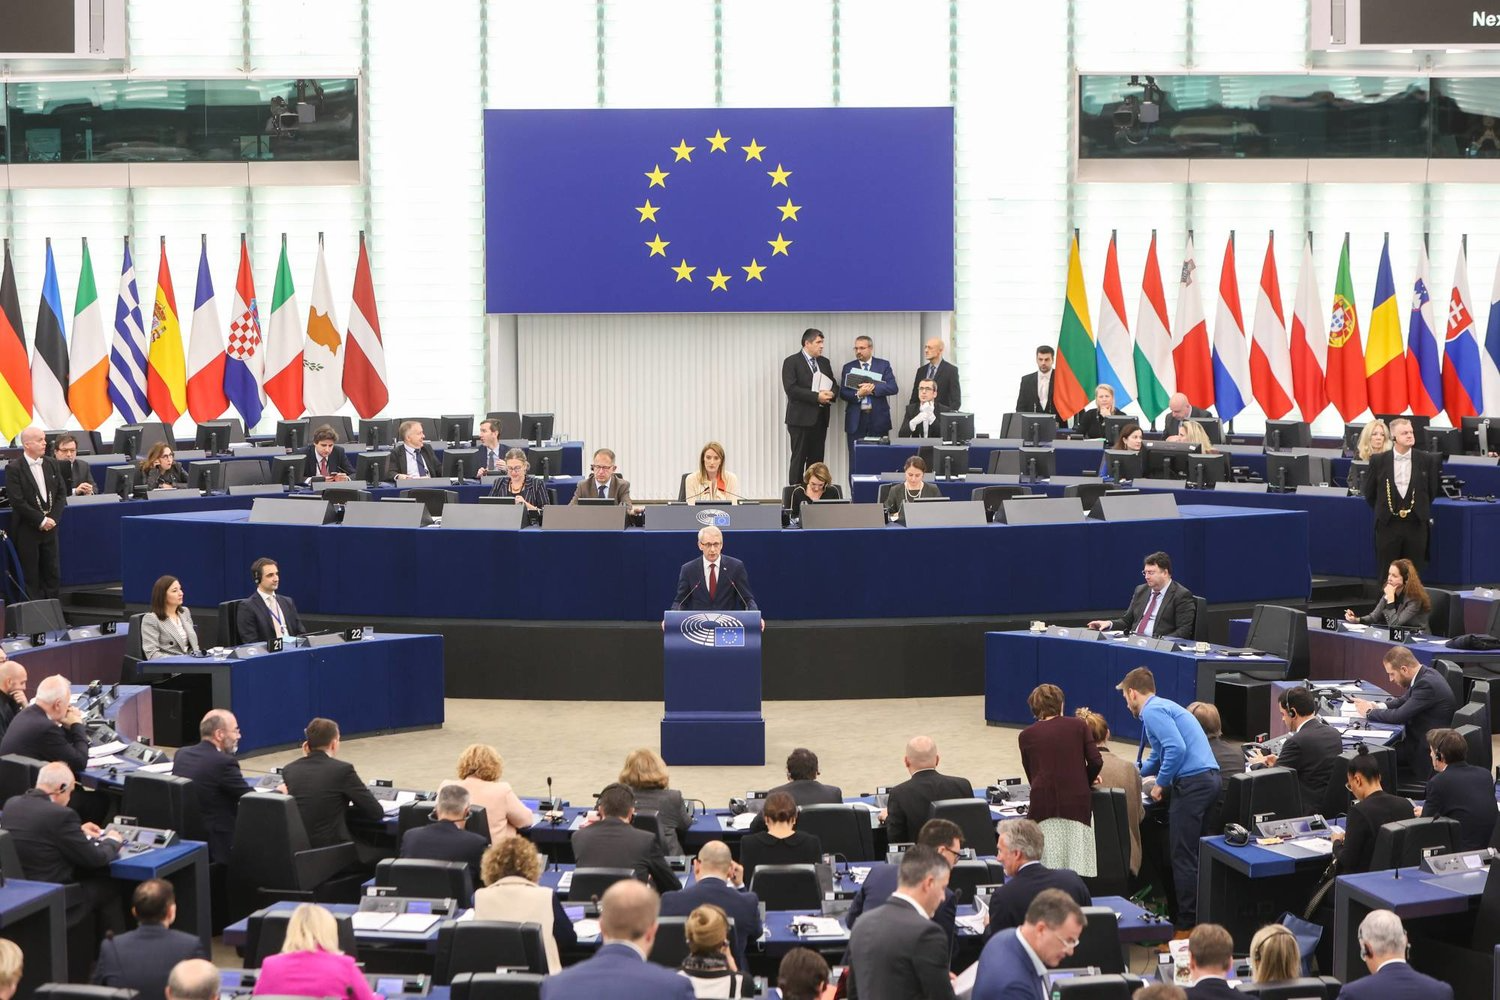 The European Parliament adopted RESOLUTION against Iran